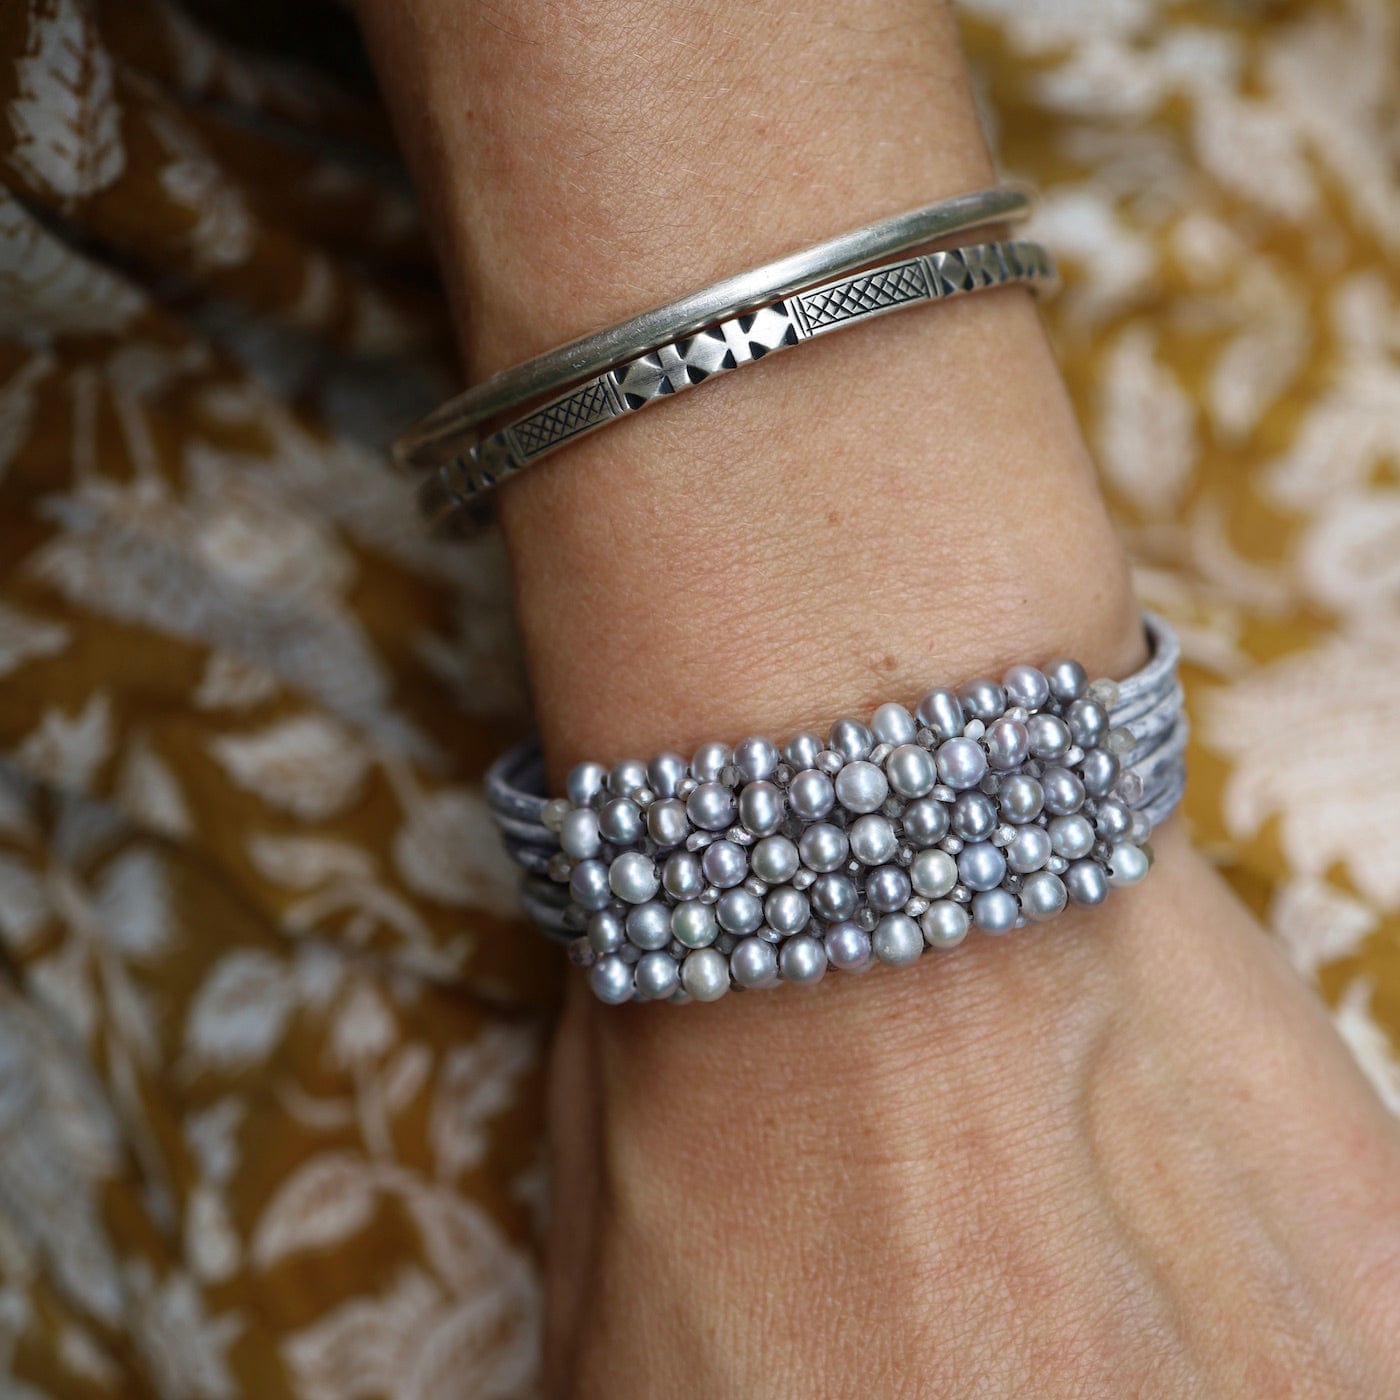 BRC-JM Hand Stitched Grey Pearls Infused with Smokey Quartz Leather Bracelet